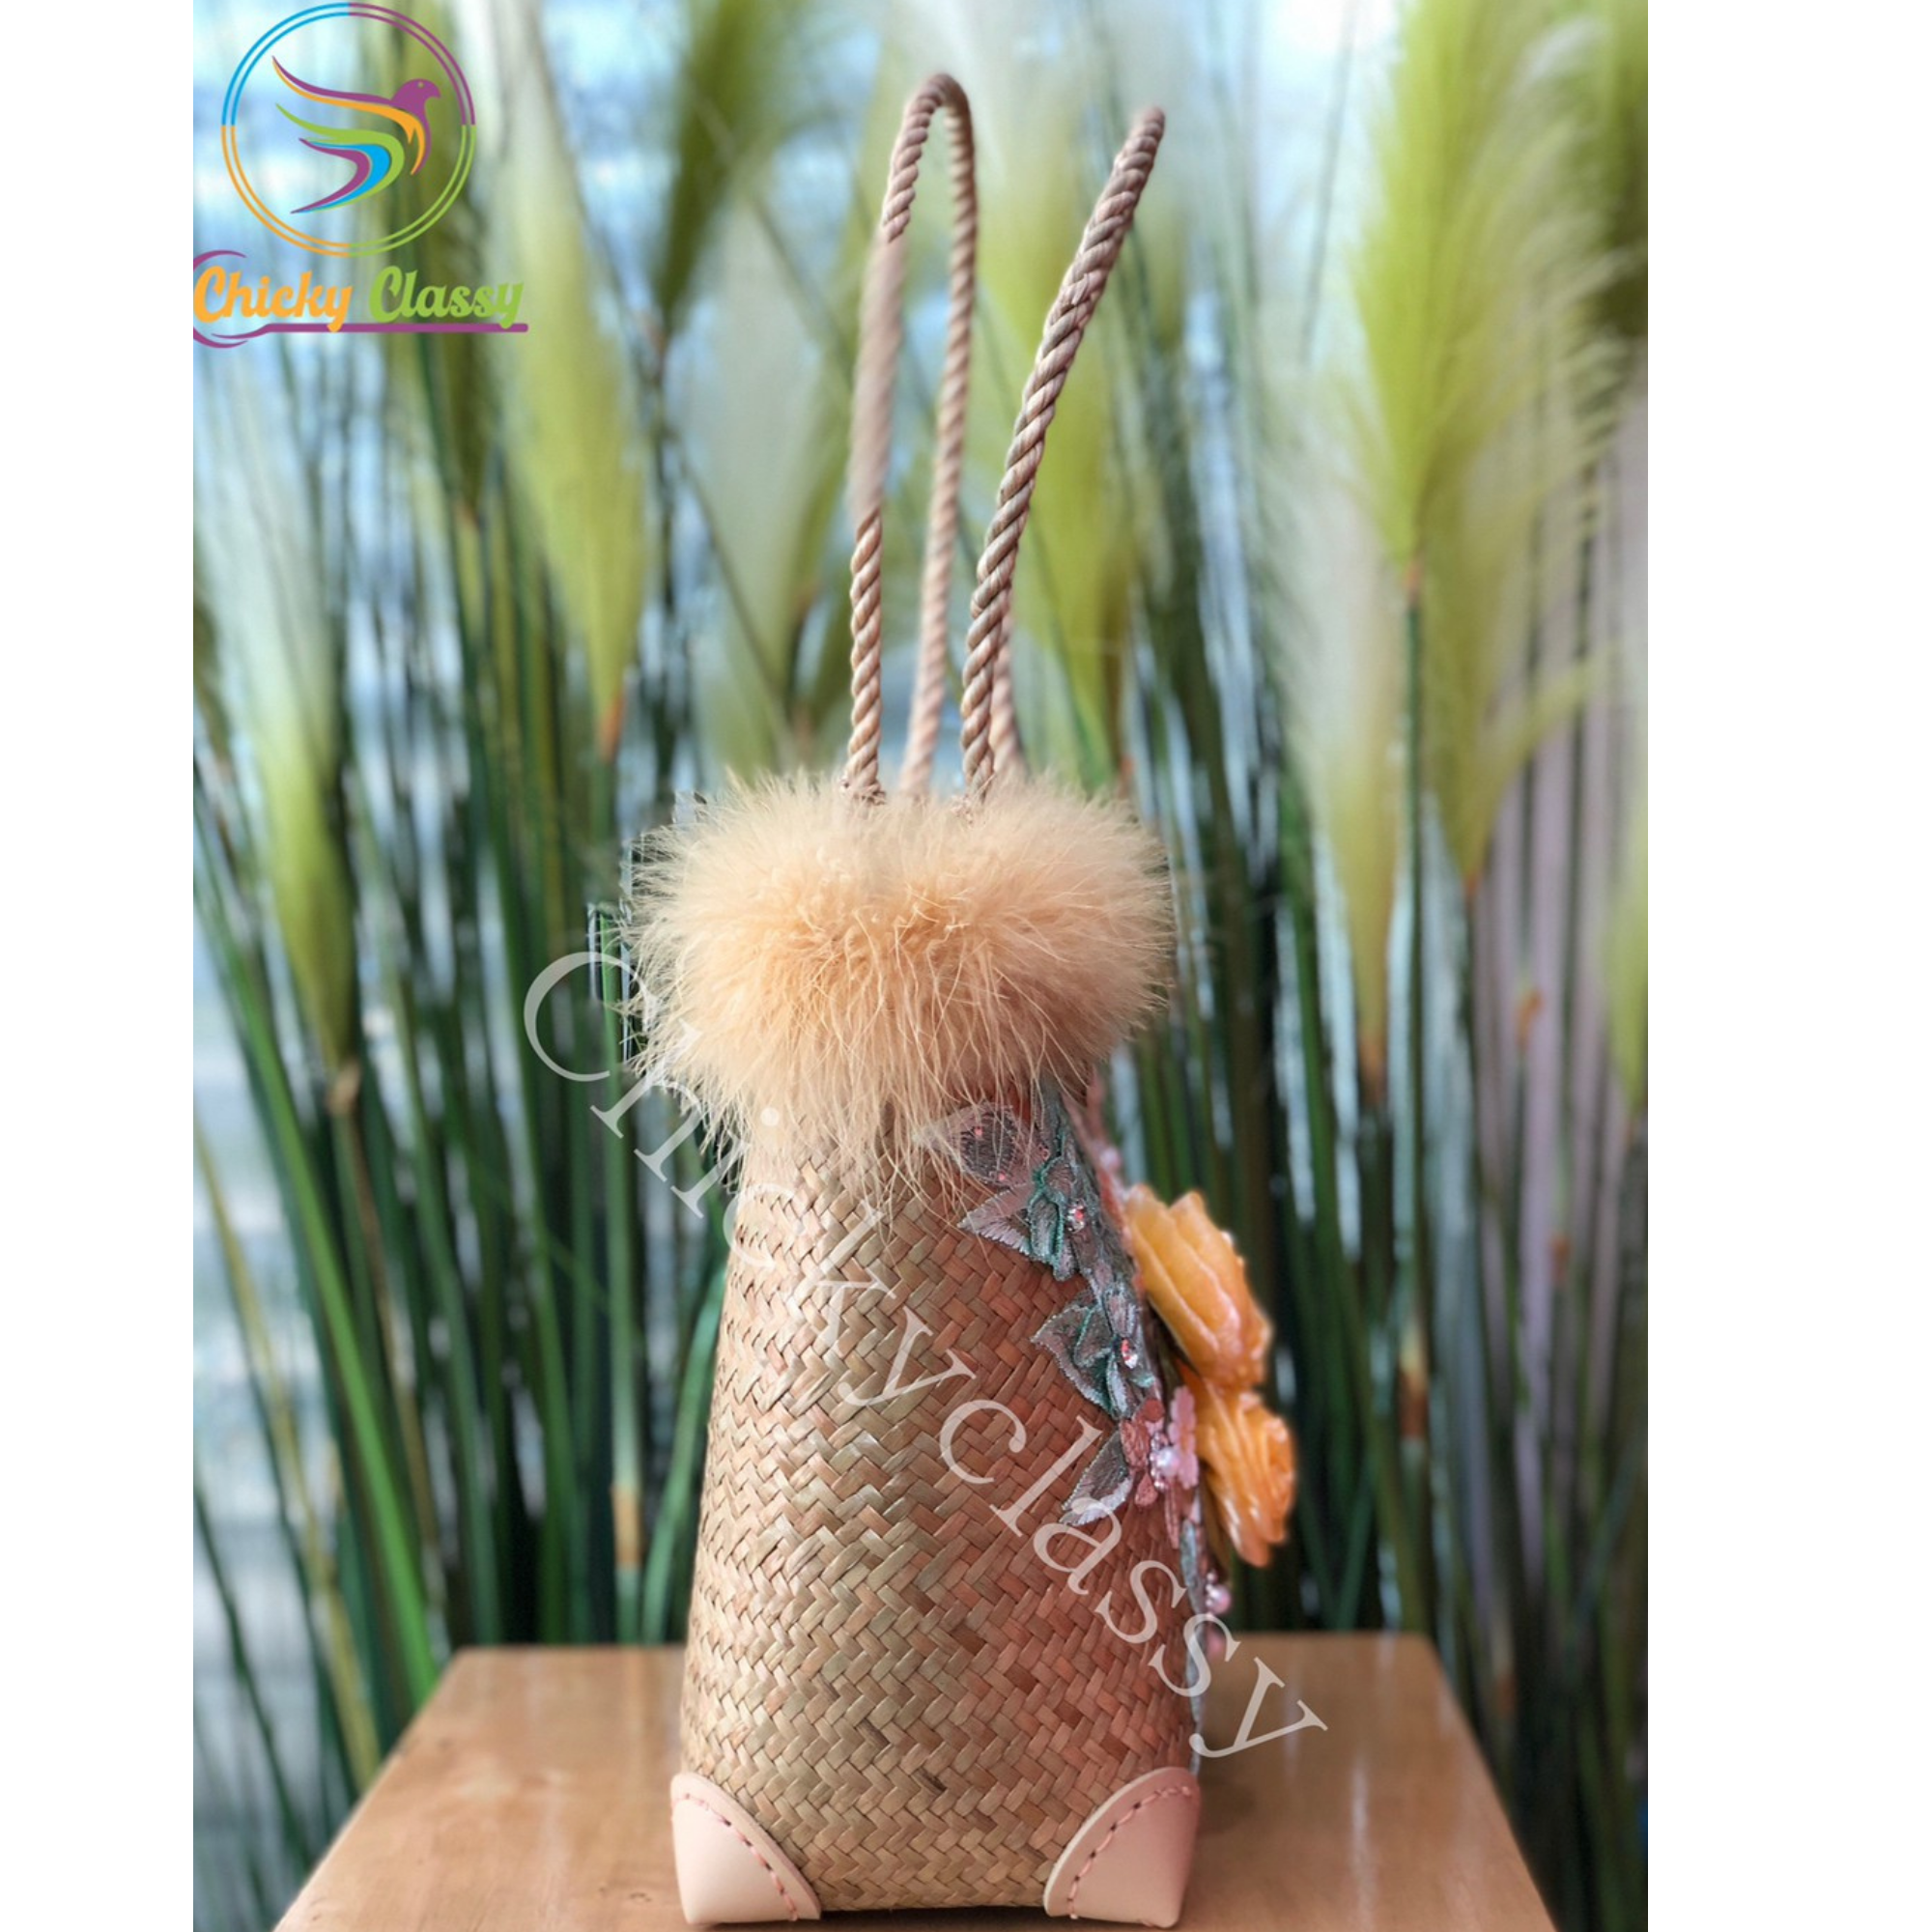 Chicky Classy Home made straw small elegant bag